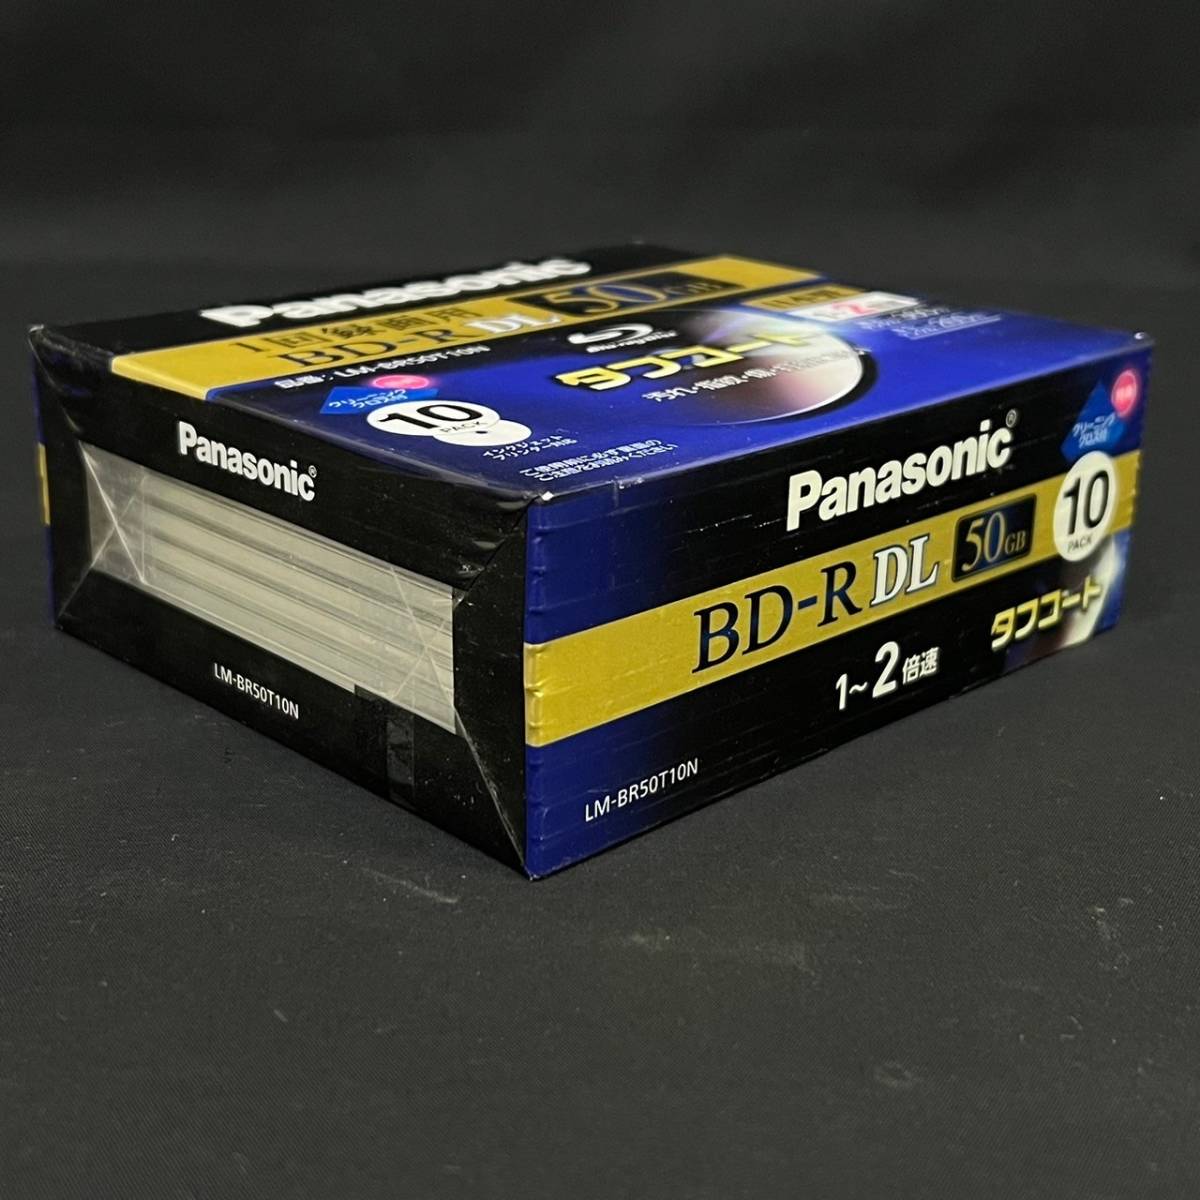 BKg186R 60 未開封 未使用 Panasonic BD-R DL LM-BR50T10N 50GB タフコート ブルーレイディスク 10枚パック 日本製 録画用 2倍速_画像4